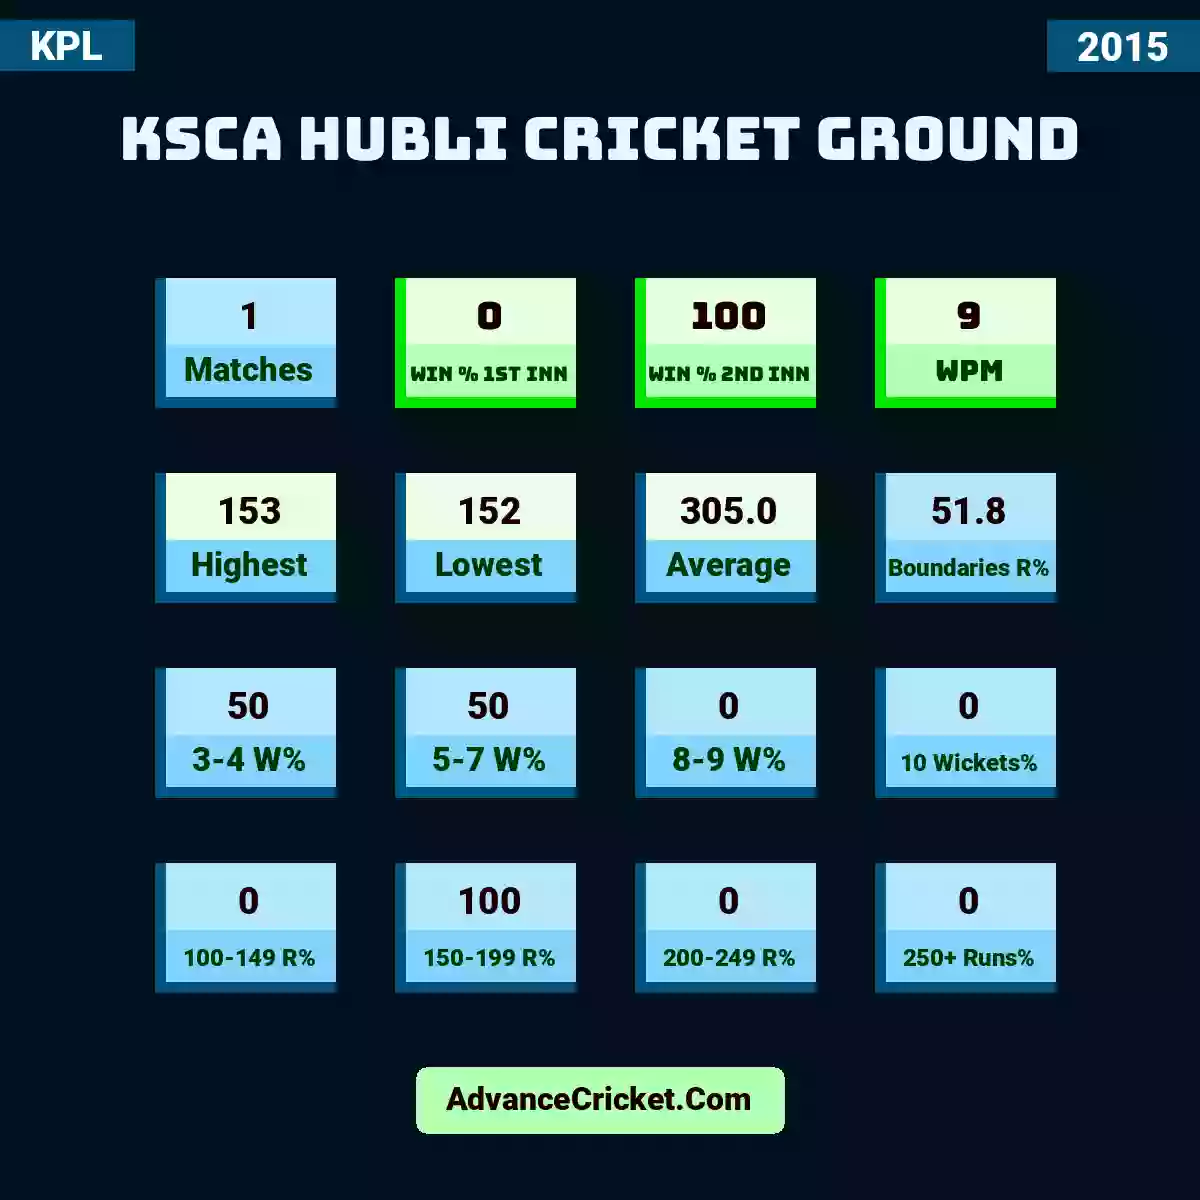 Image showing KSCA Hubli Cricket Ground with Matches: 1, Win % 1st Inn: 0, Win % 2nd Inn: 100, WPM: 9, Highest: 153, Lowest: 152, Average: 305.0, Boundaries R%: 51.8, 3-4 W%: 50, 5-7 W%: 50, 8-9 W%: 0, 10 Wickets%: 0, 100-149 R%: 0, 150-199 R%: 100, 200-249 R%: 0, 250+ Runs%: 0.